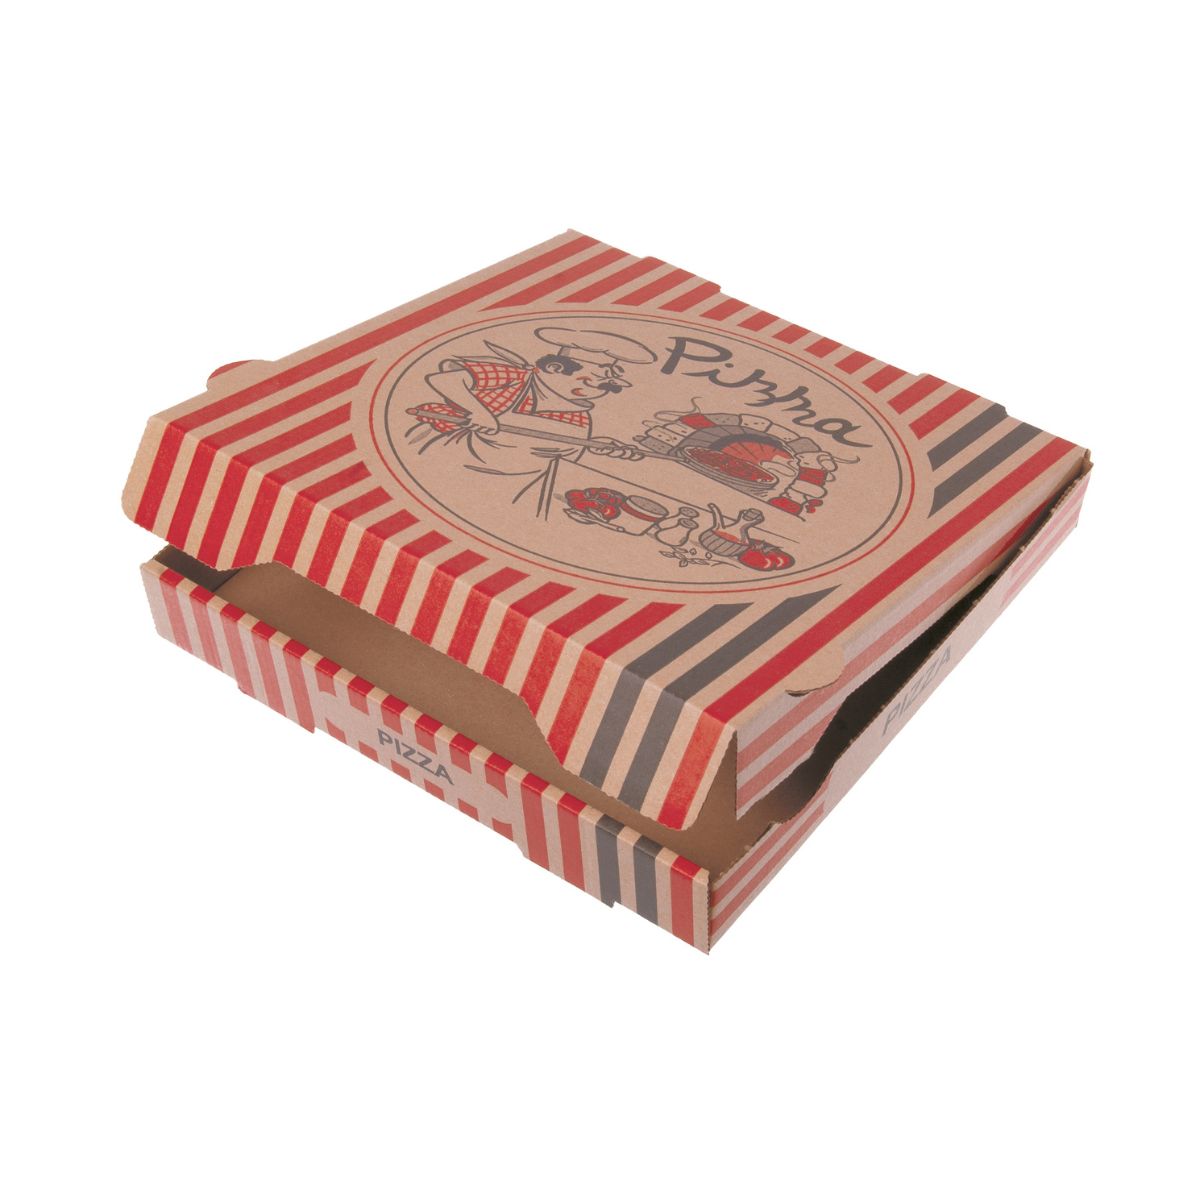 Pizzabox 36x36x4cm | Kraft rot-braun